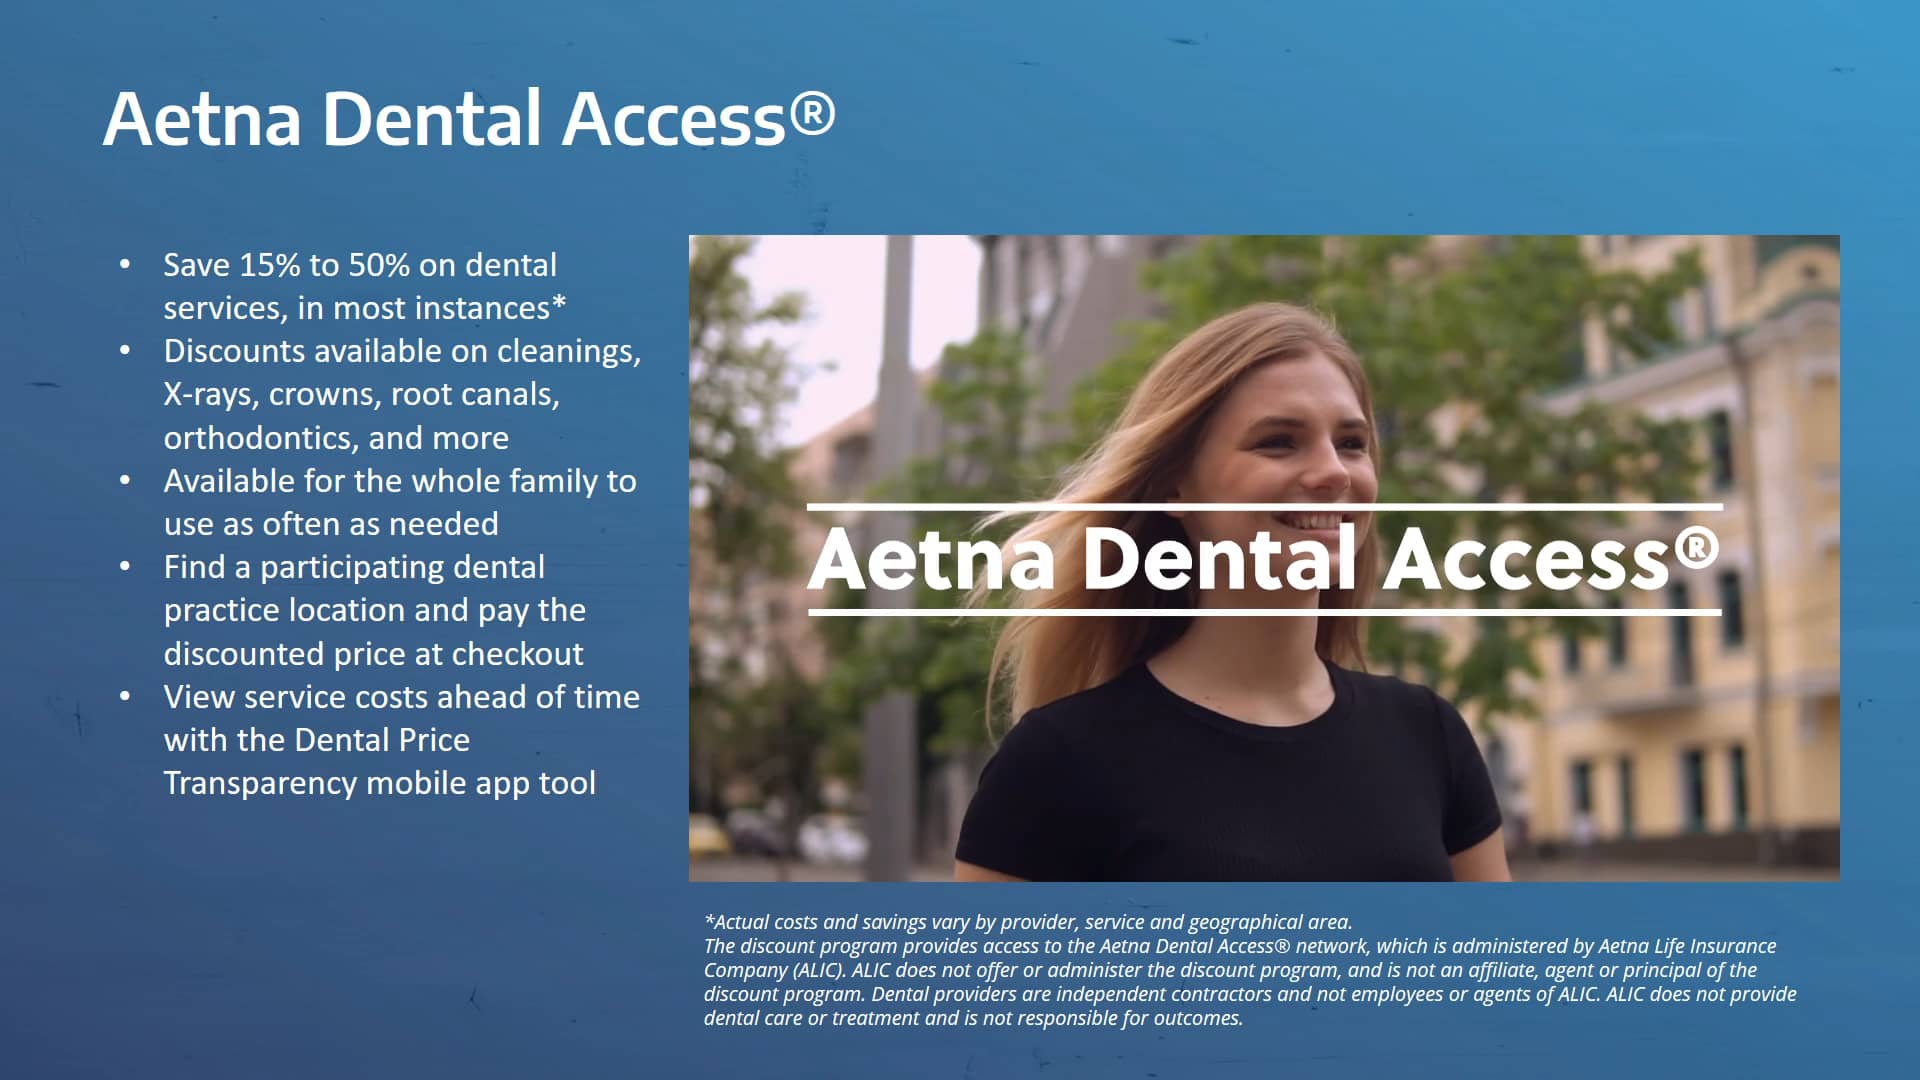 Aetna Dental Access MBW on Vimeo